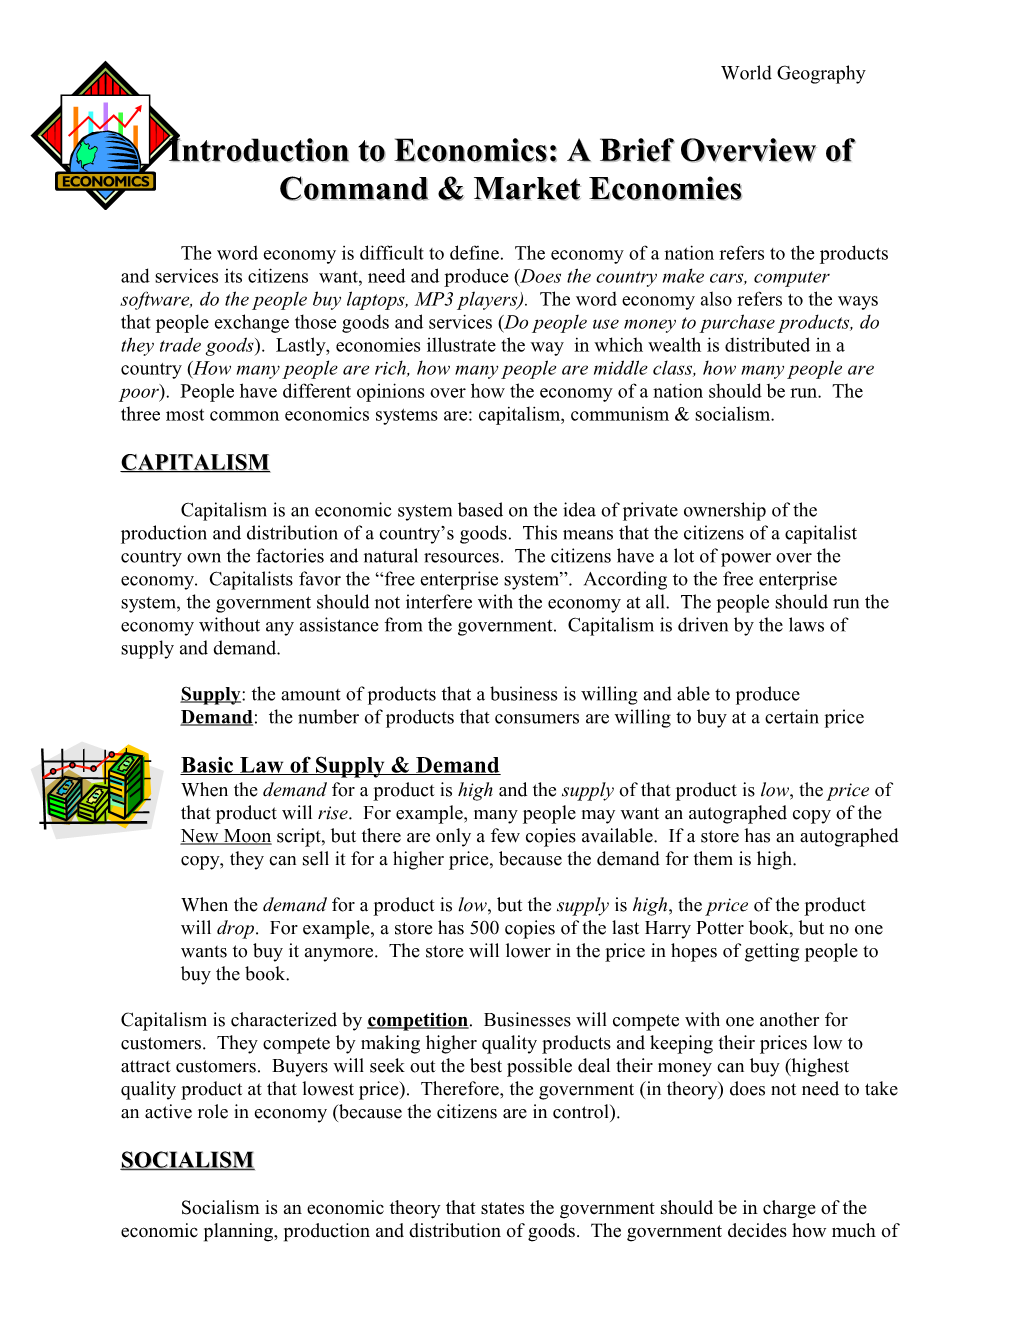 Introduction to Economics: a Brief Overview of Command & Market Economies